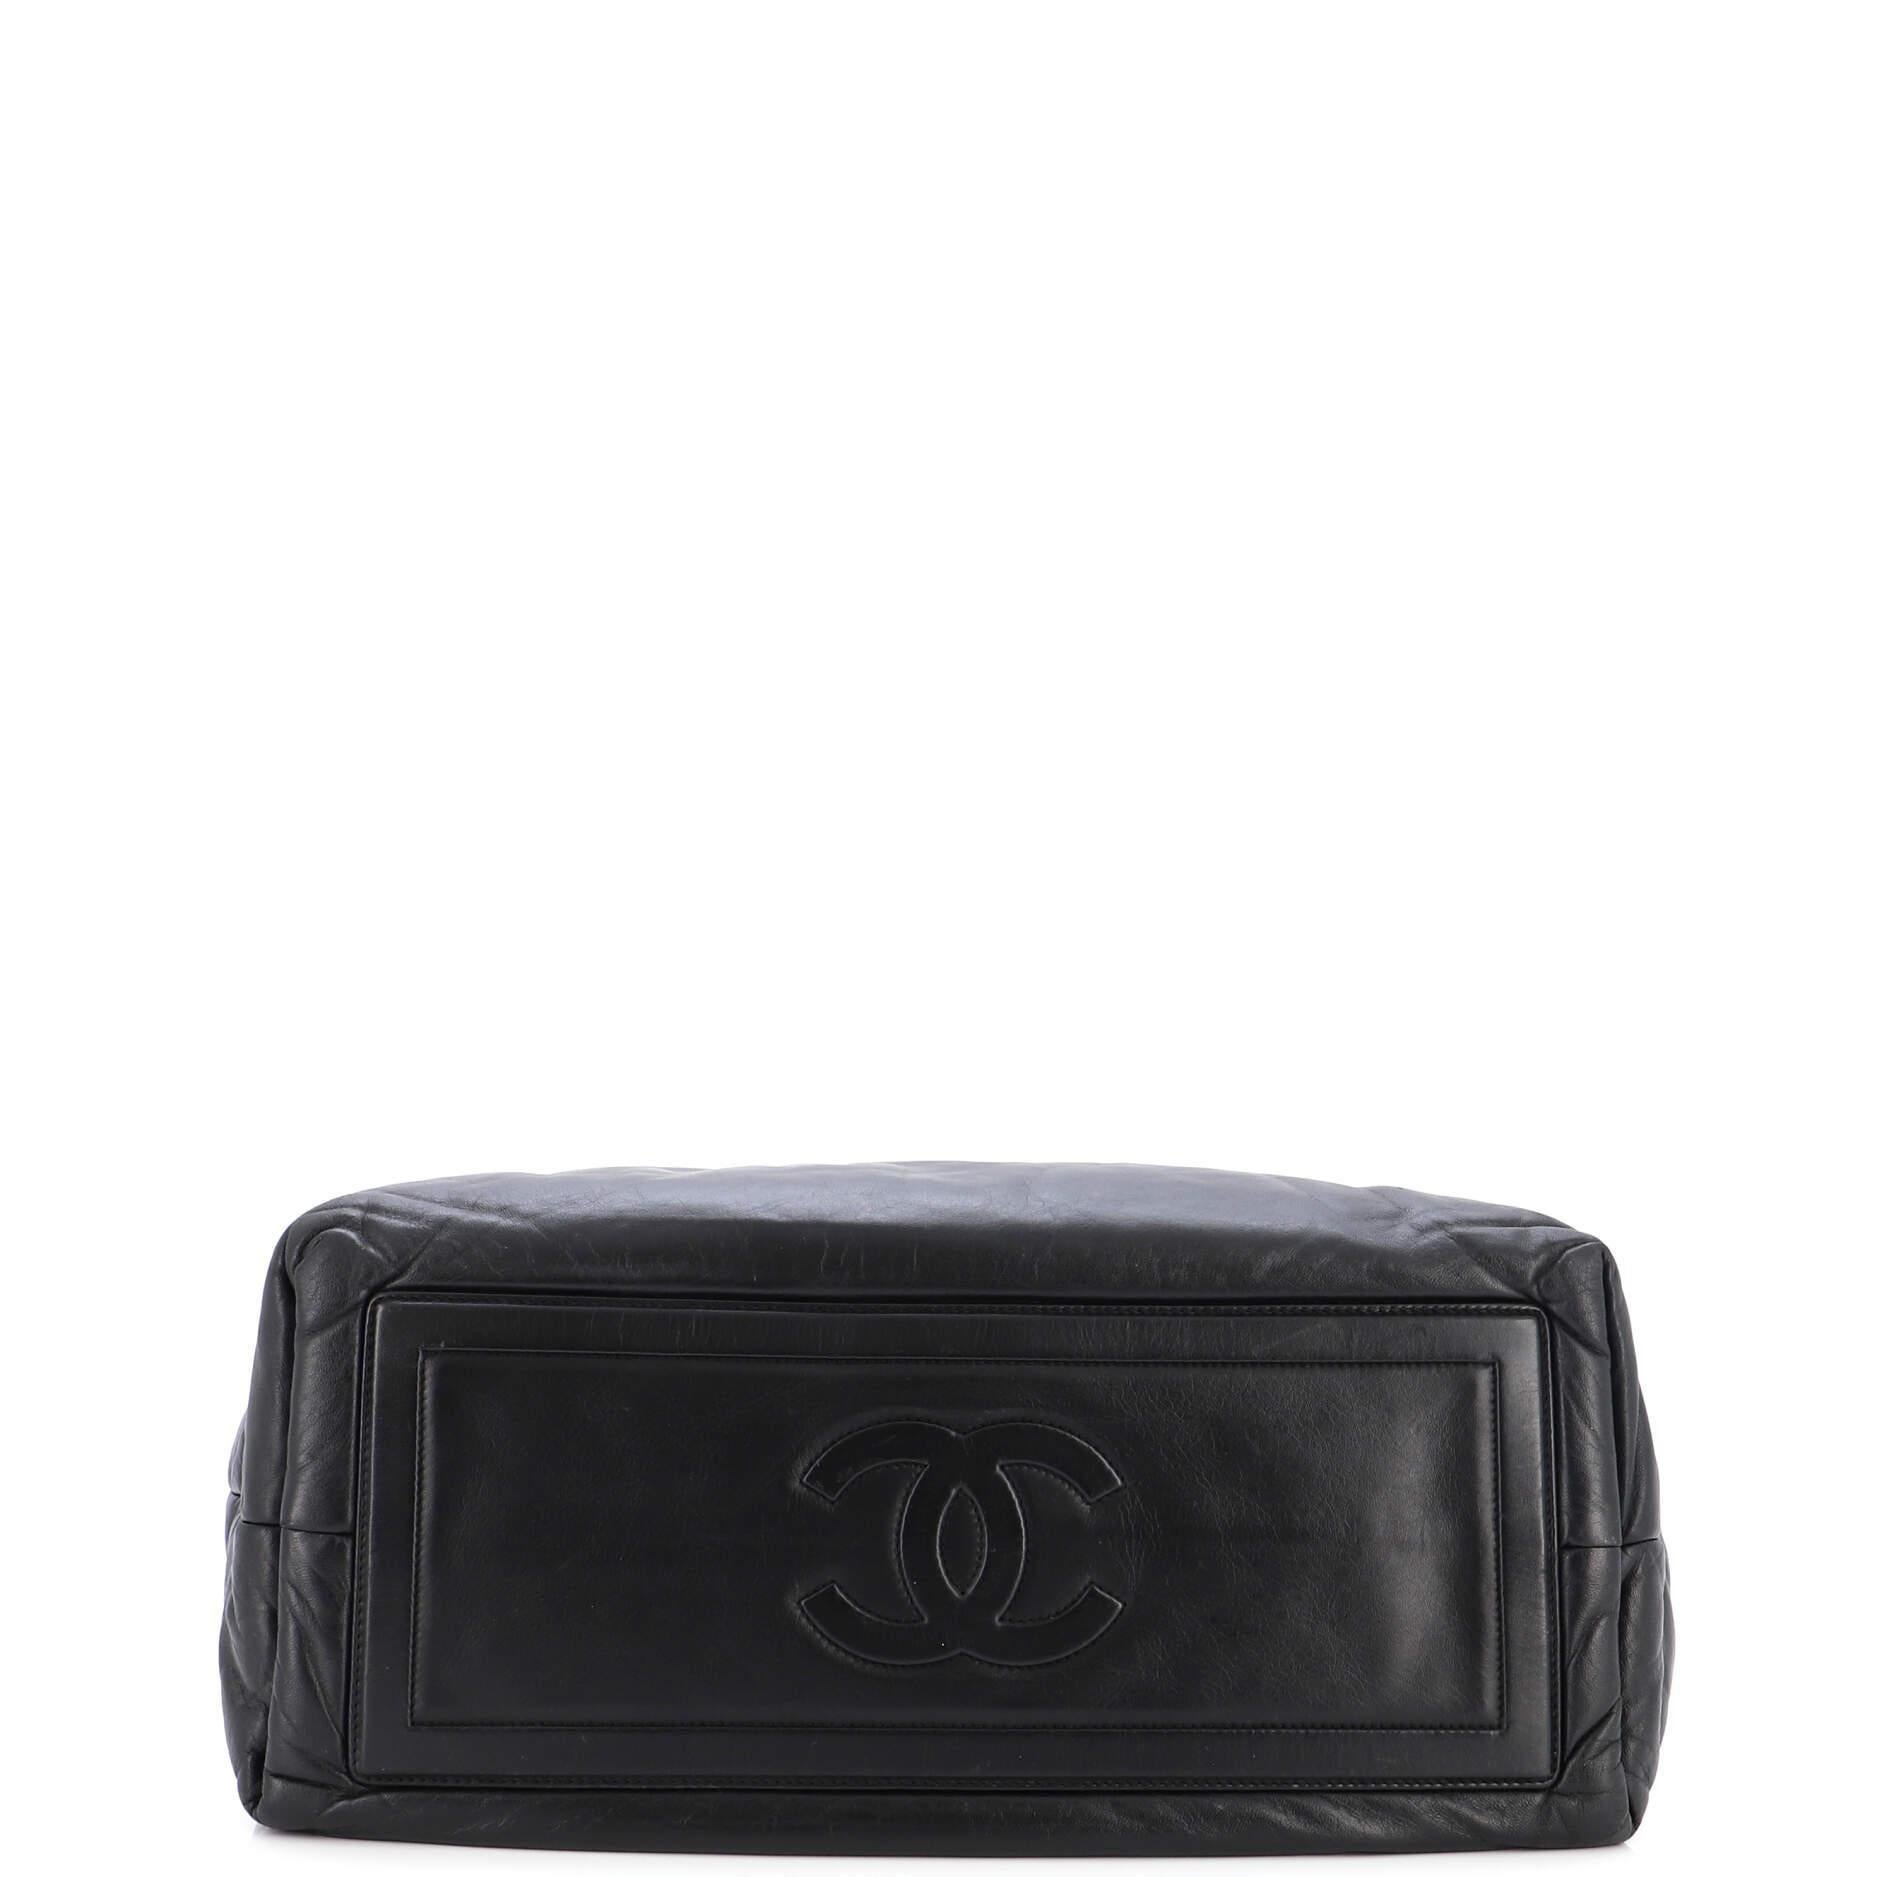 Chanel 2008 Cocoon Réversible Large Black Red Lambskin Travel Tote Carry On Bag  en vente 7